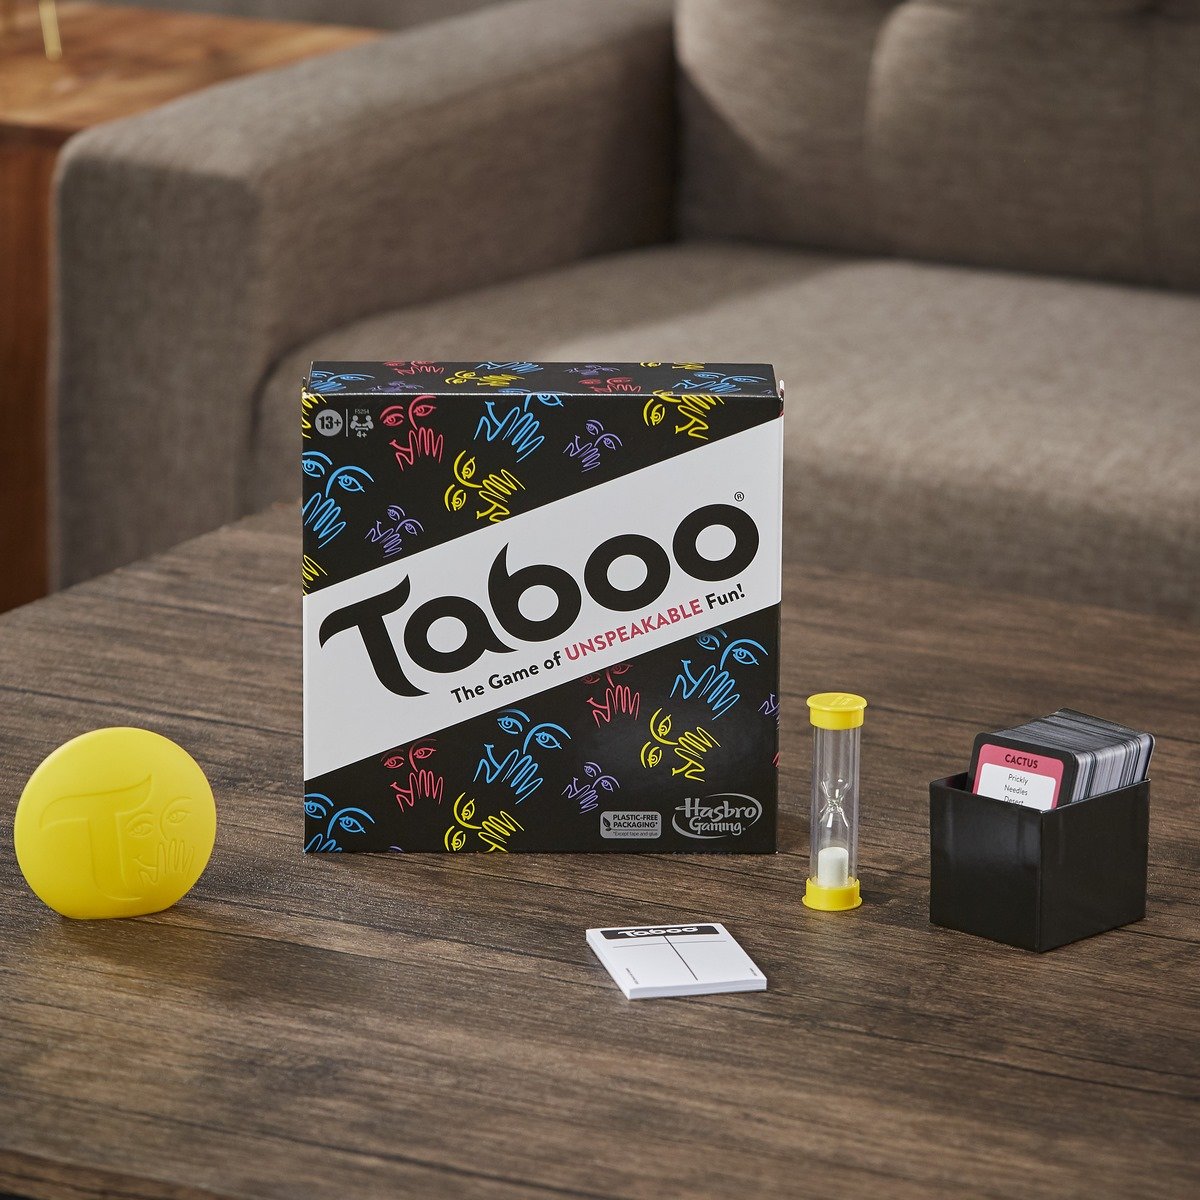 Taboo - Le jeu des mots interdits - La Grande Récré